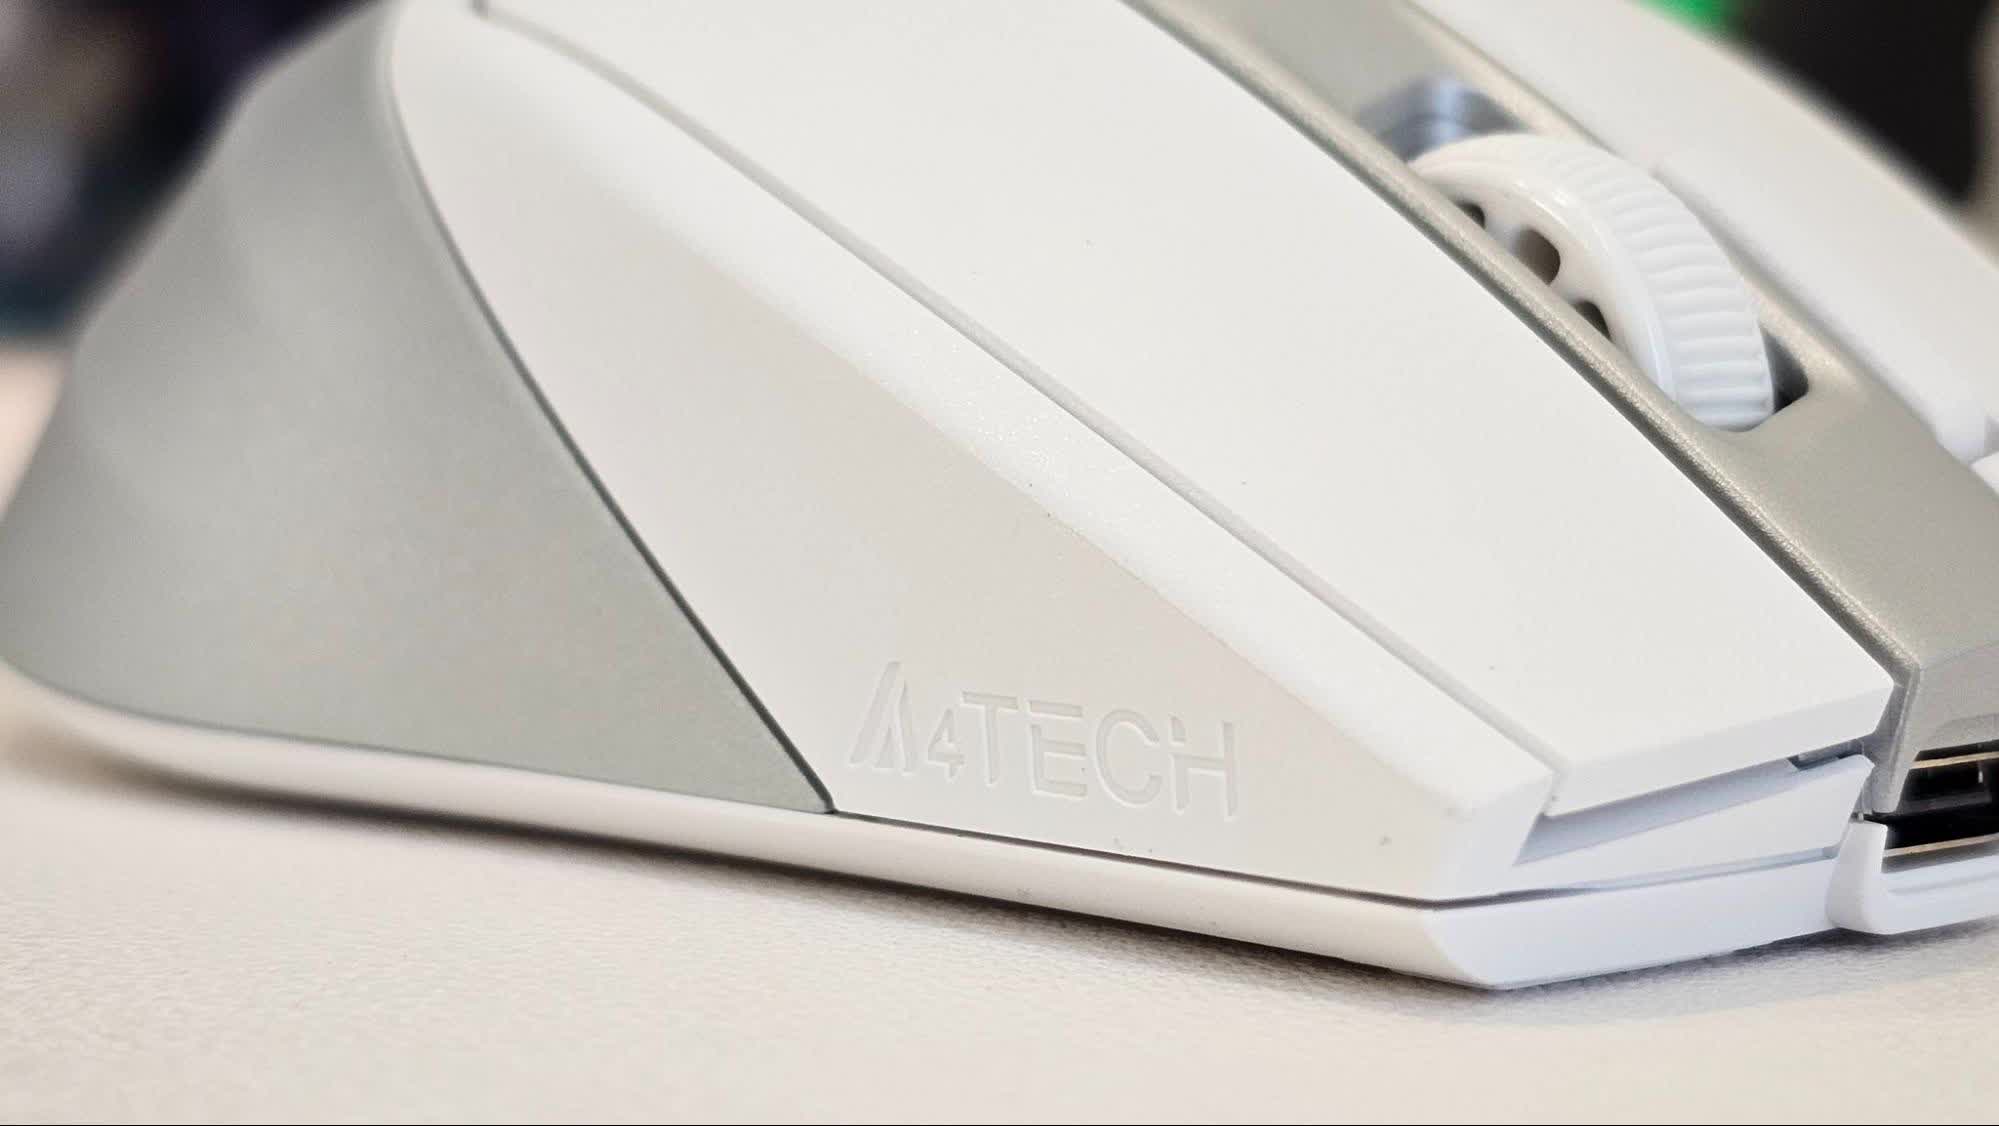 A4Tech Fstyler FB45CS Air Wireless Office Mouse Review